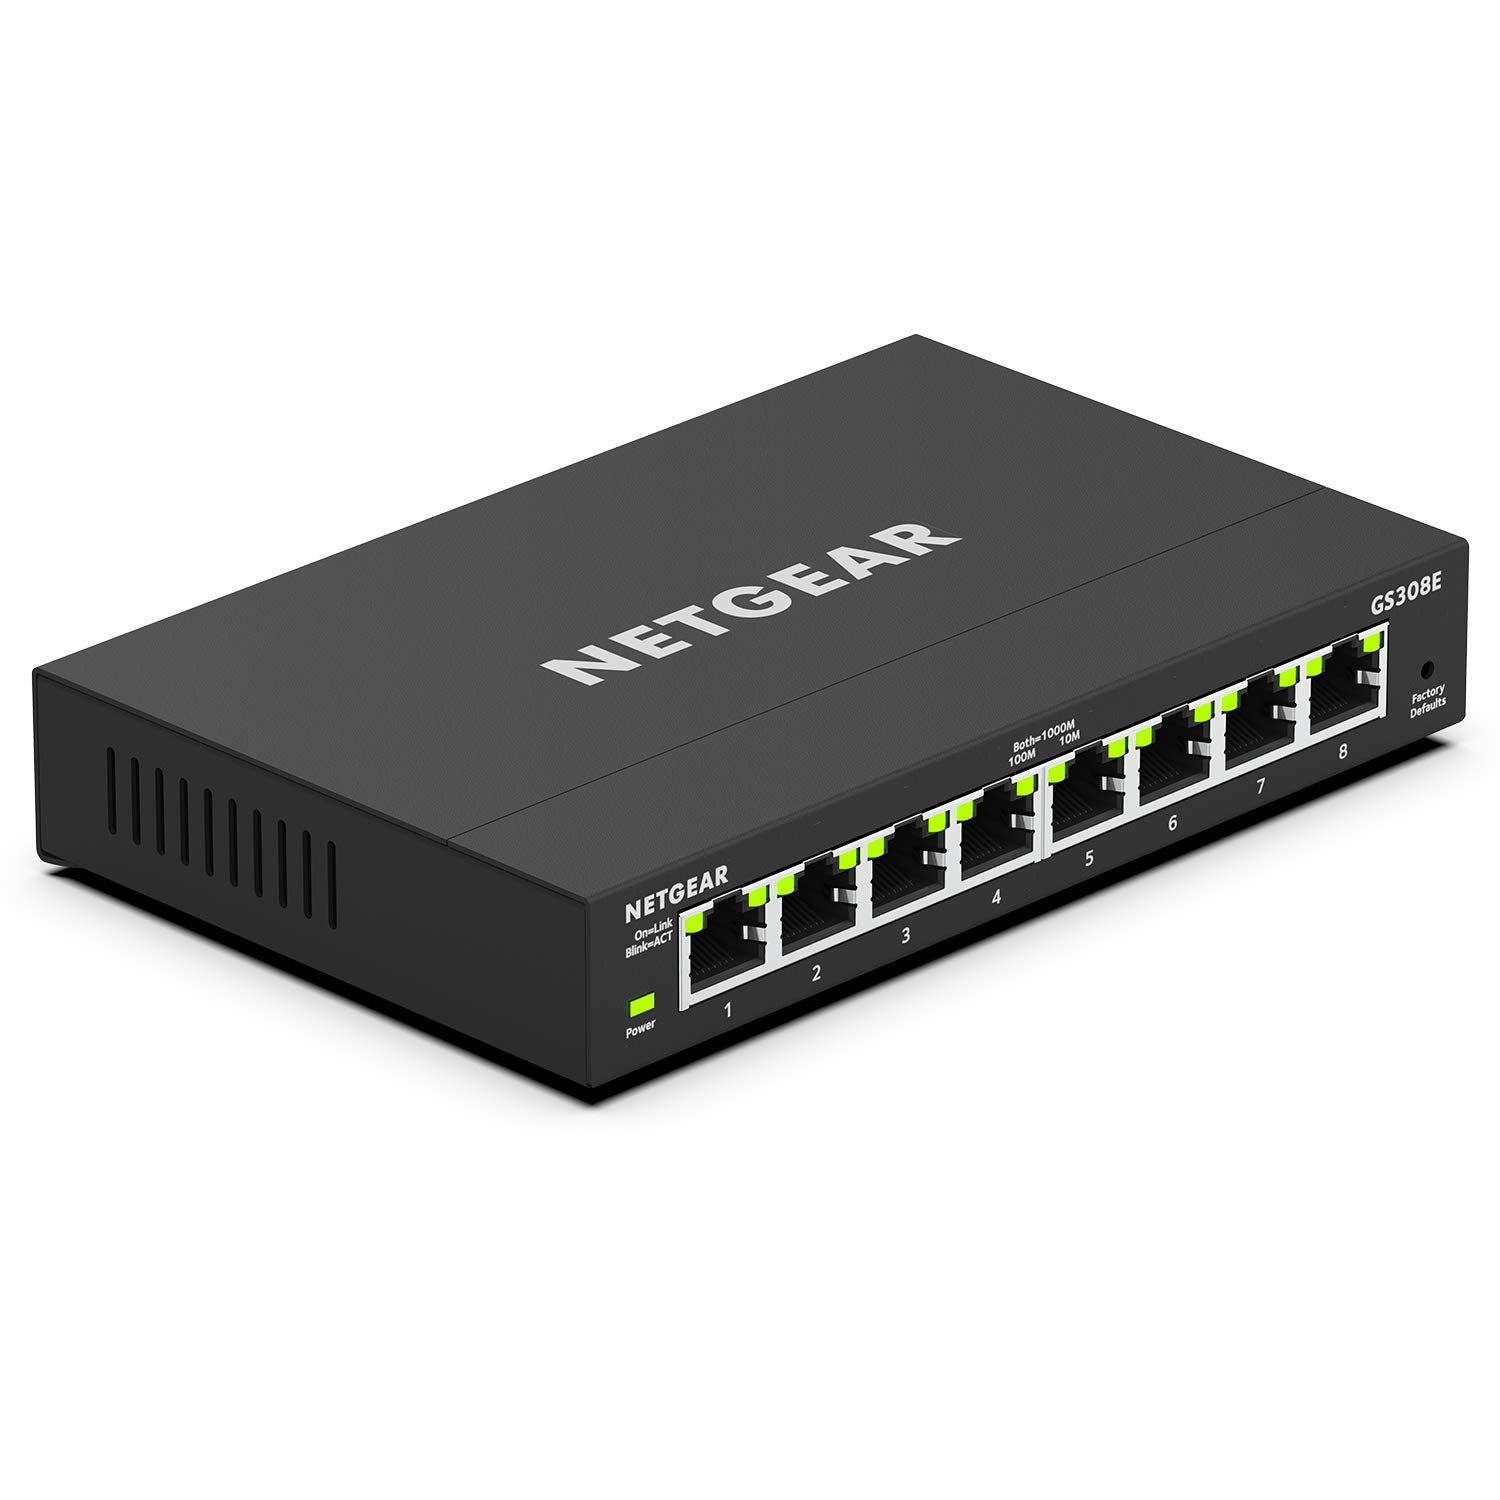 NETGEAR 8-Port Gigabit Ethernet Plus Switch (GS308E) - Desktop or Wall Mount - $27.99